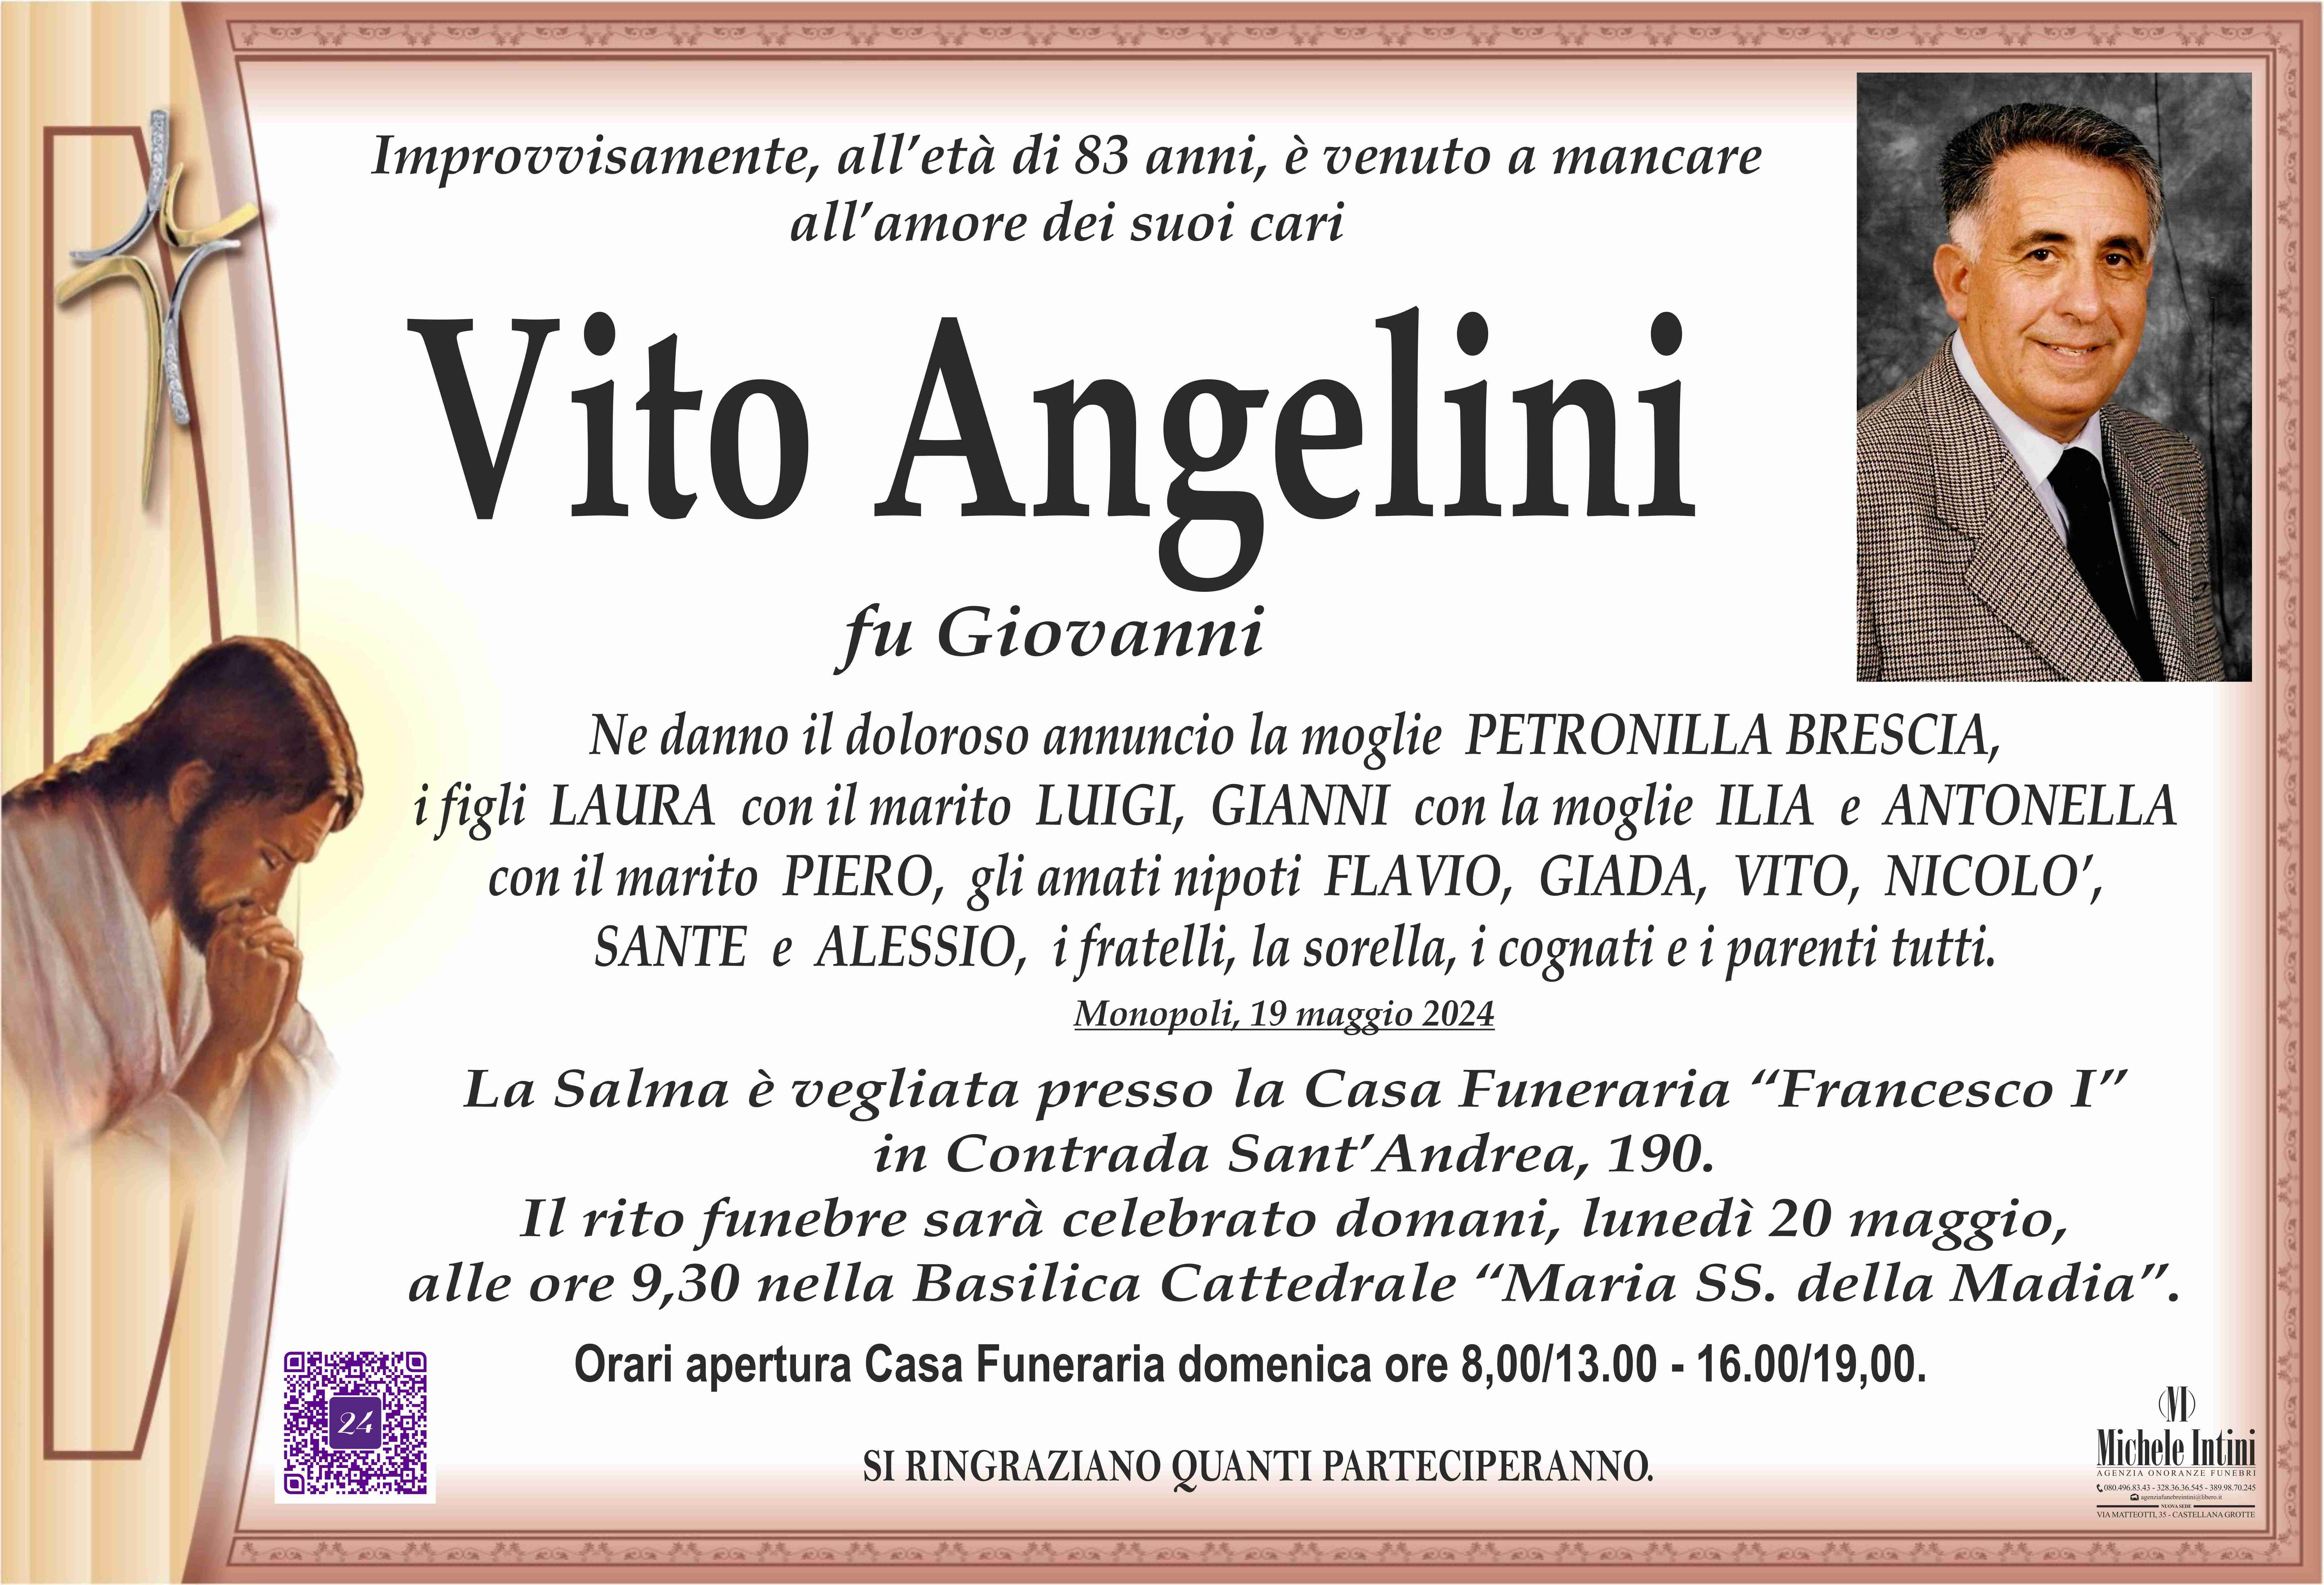 Vito Angelini